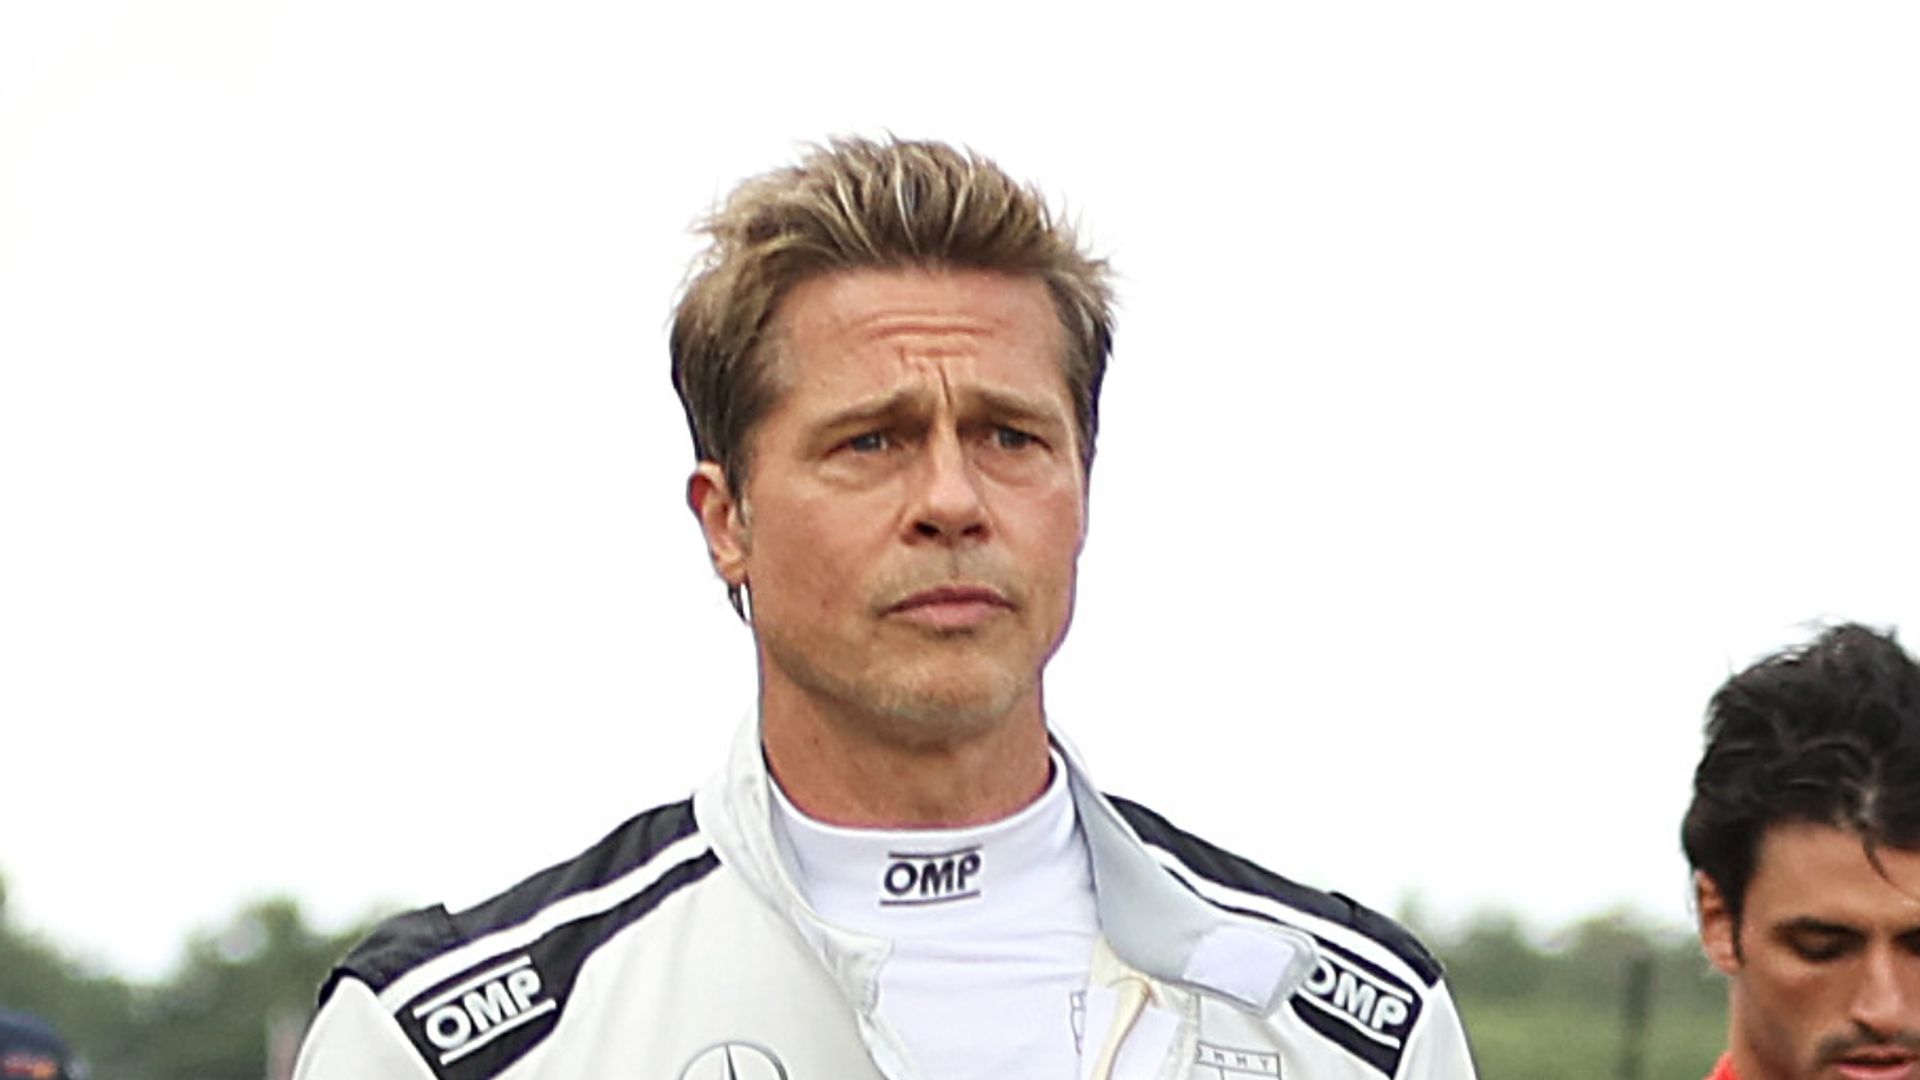 Brad Pitt, 59, turns heads at Formula 1 Grand Prix track